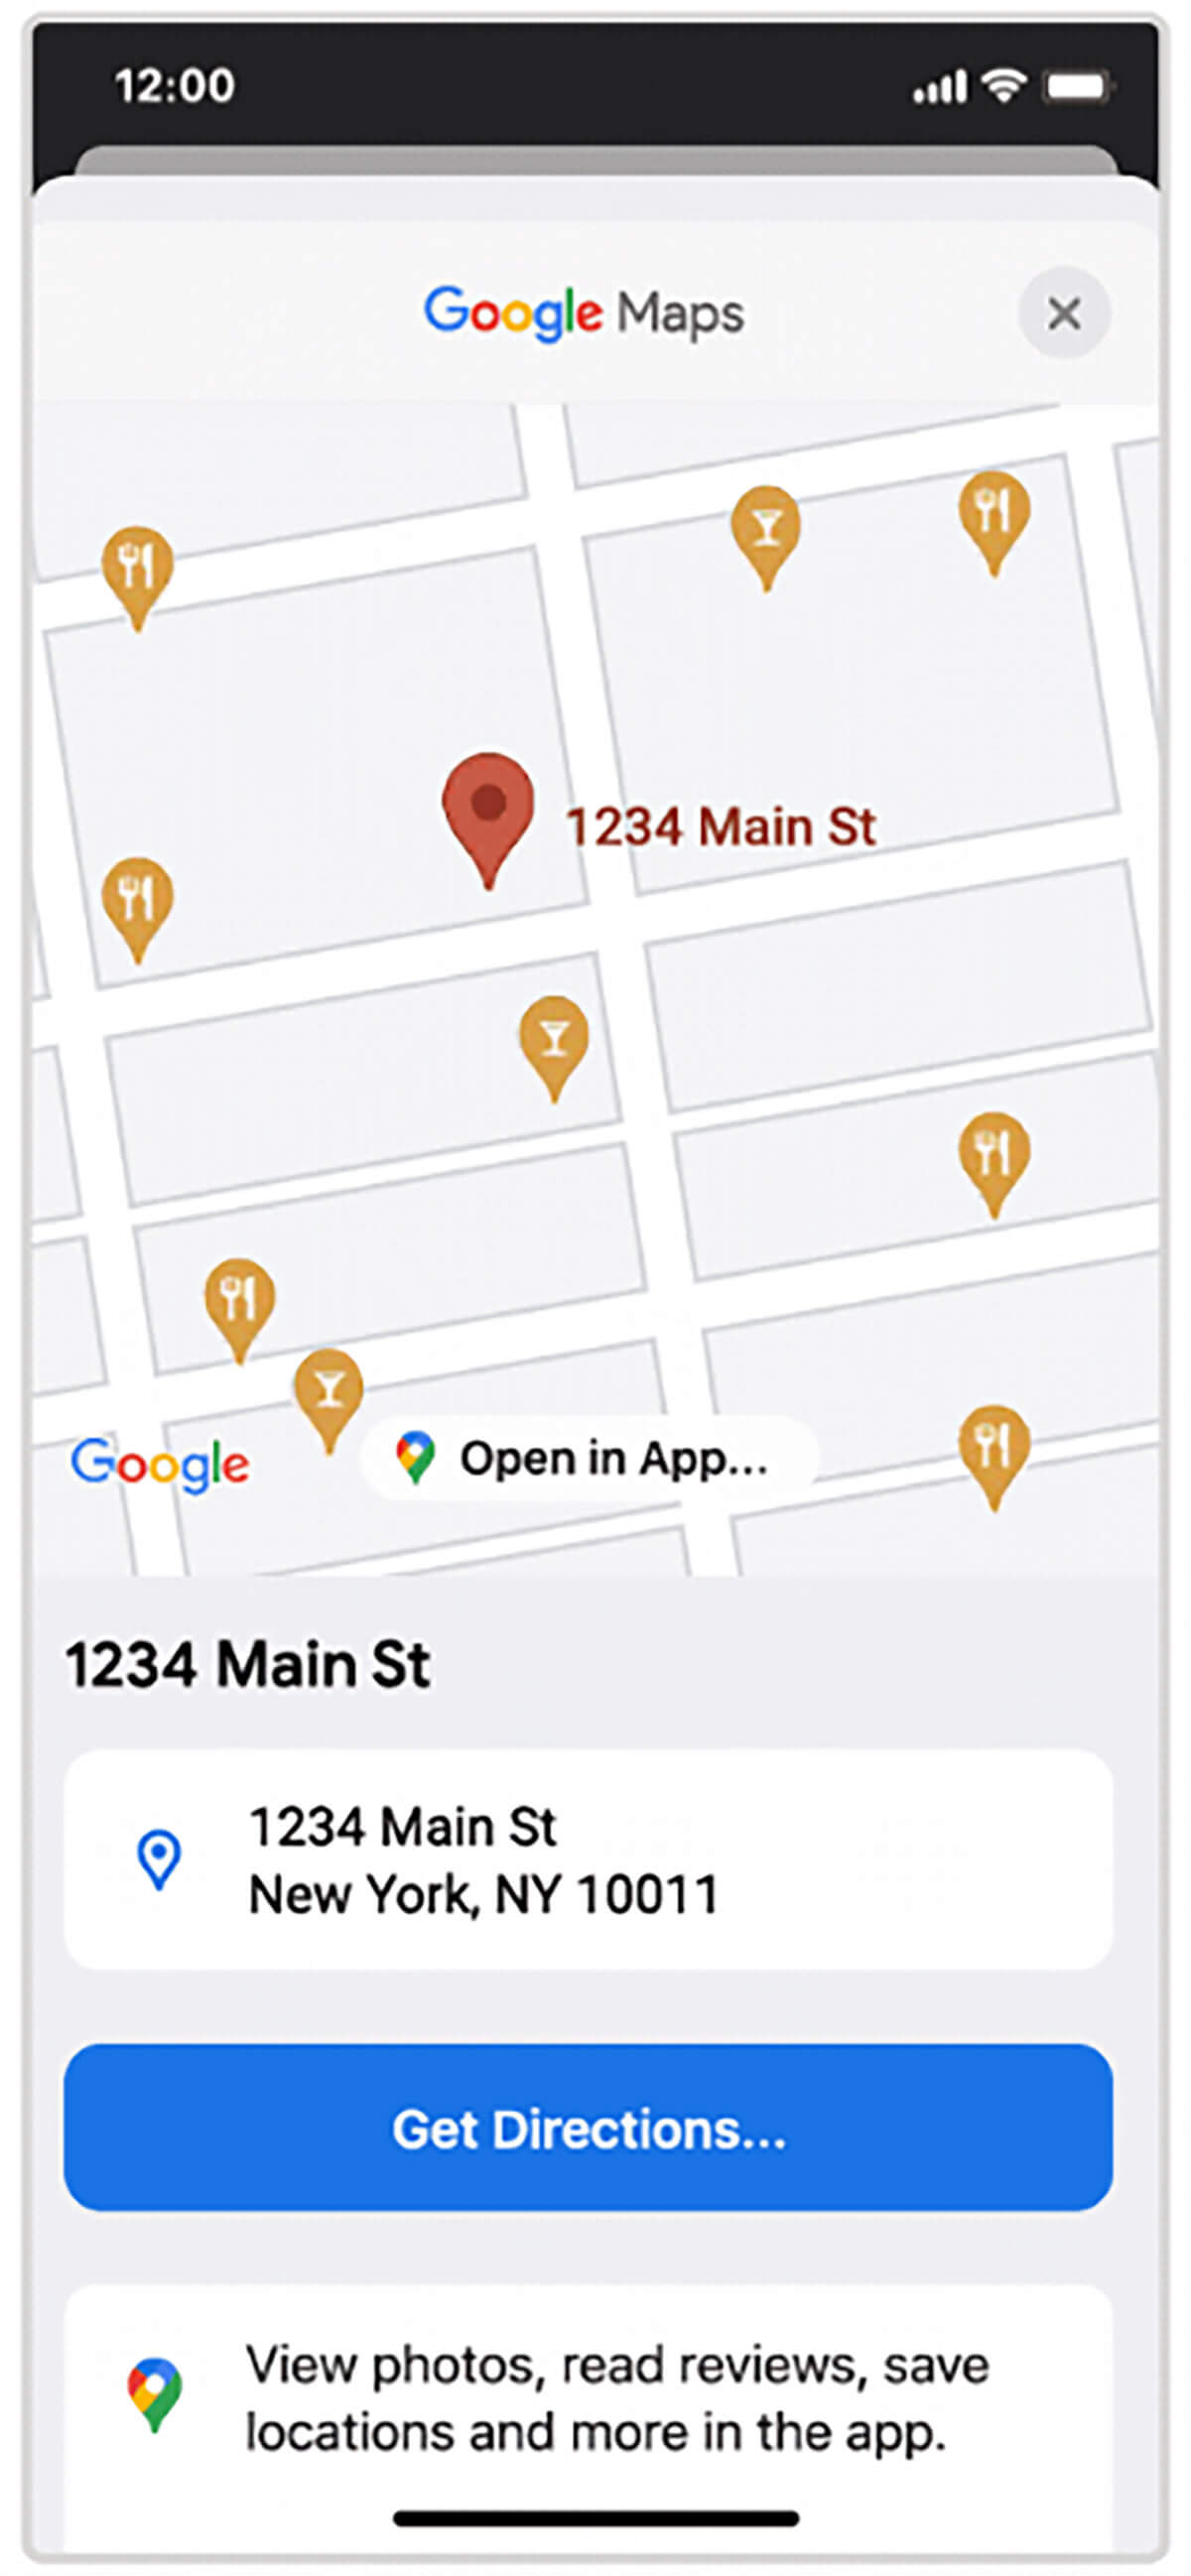 Googleマップに関する機能